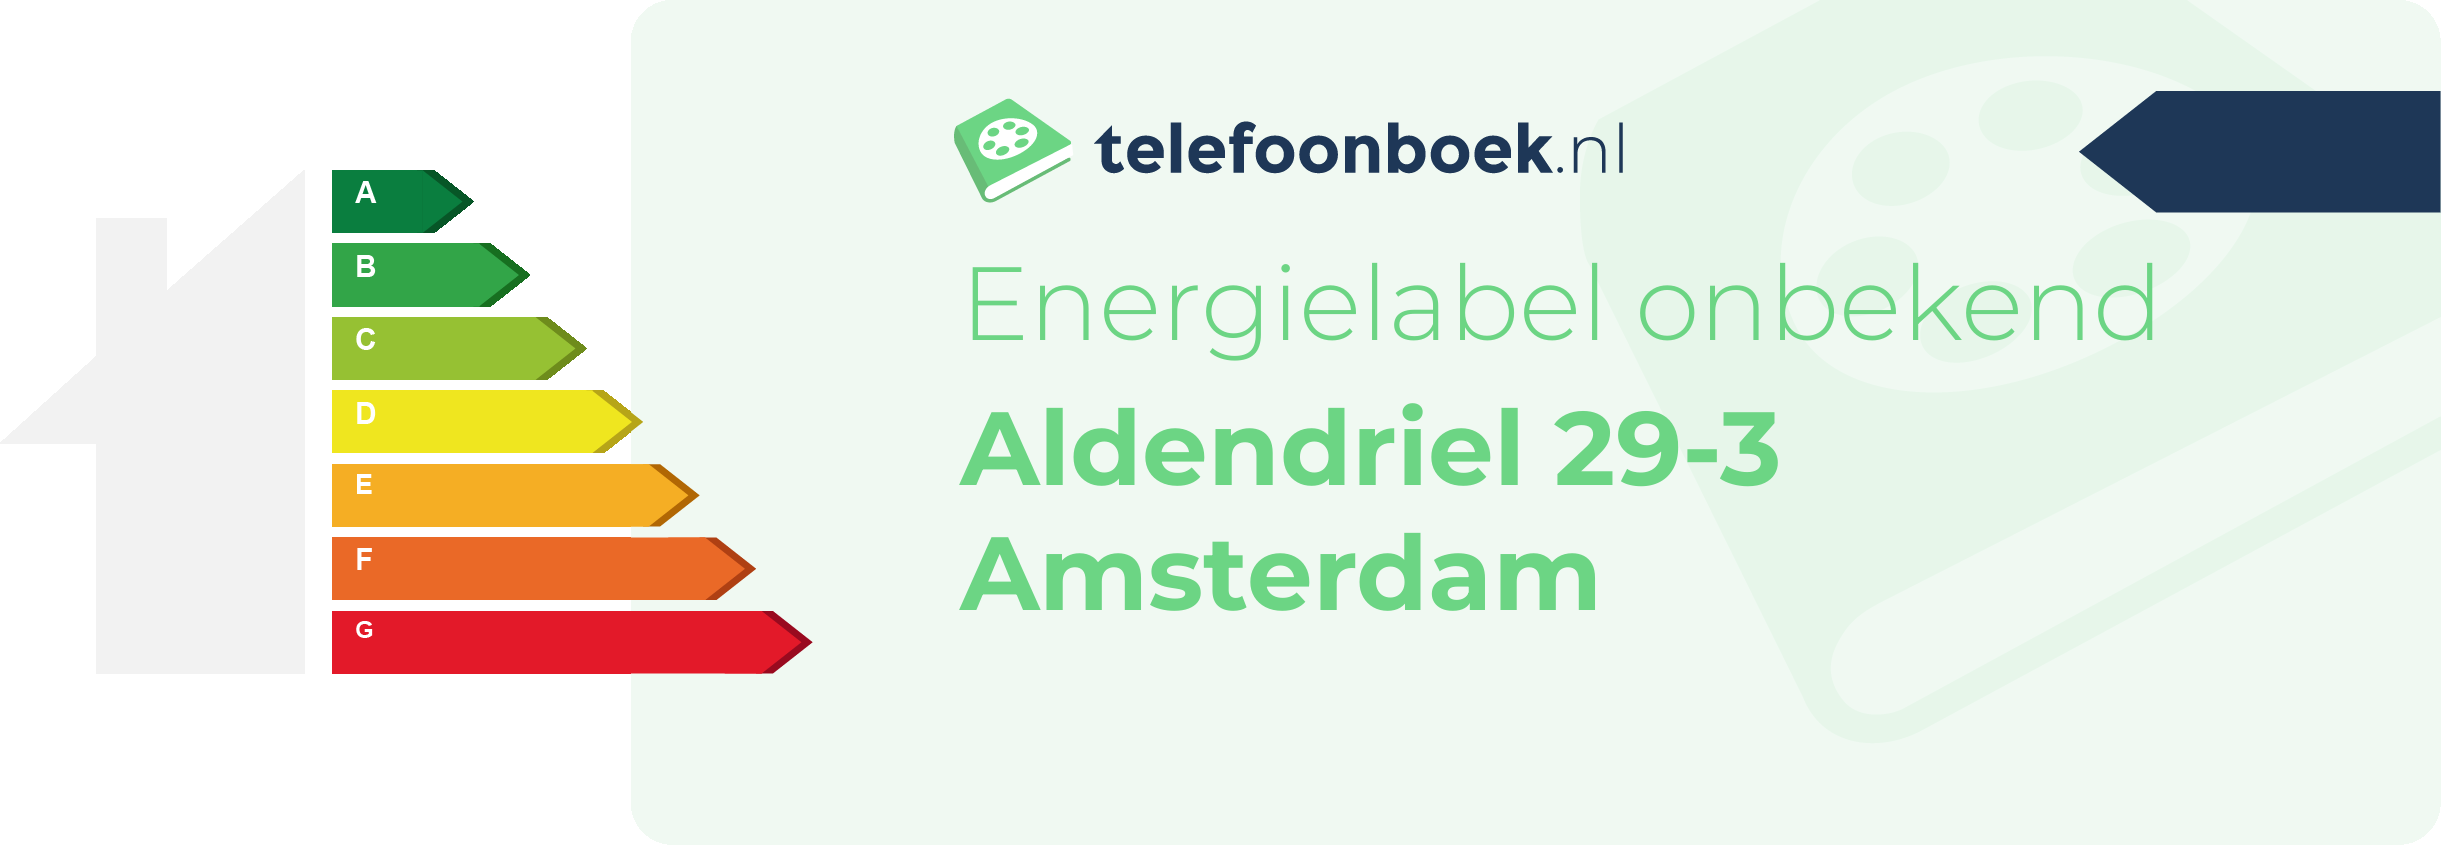 Energielabel Aldendriel 29-3 Amsterdam